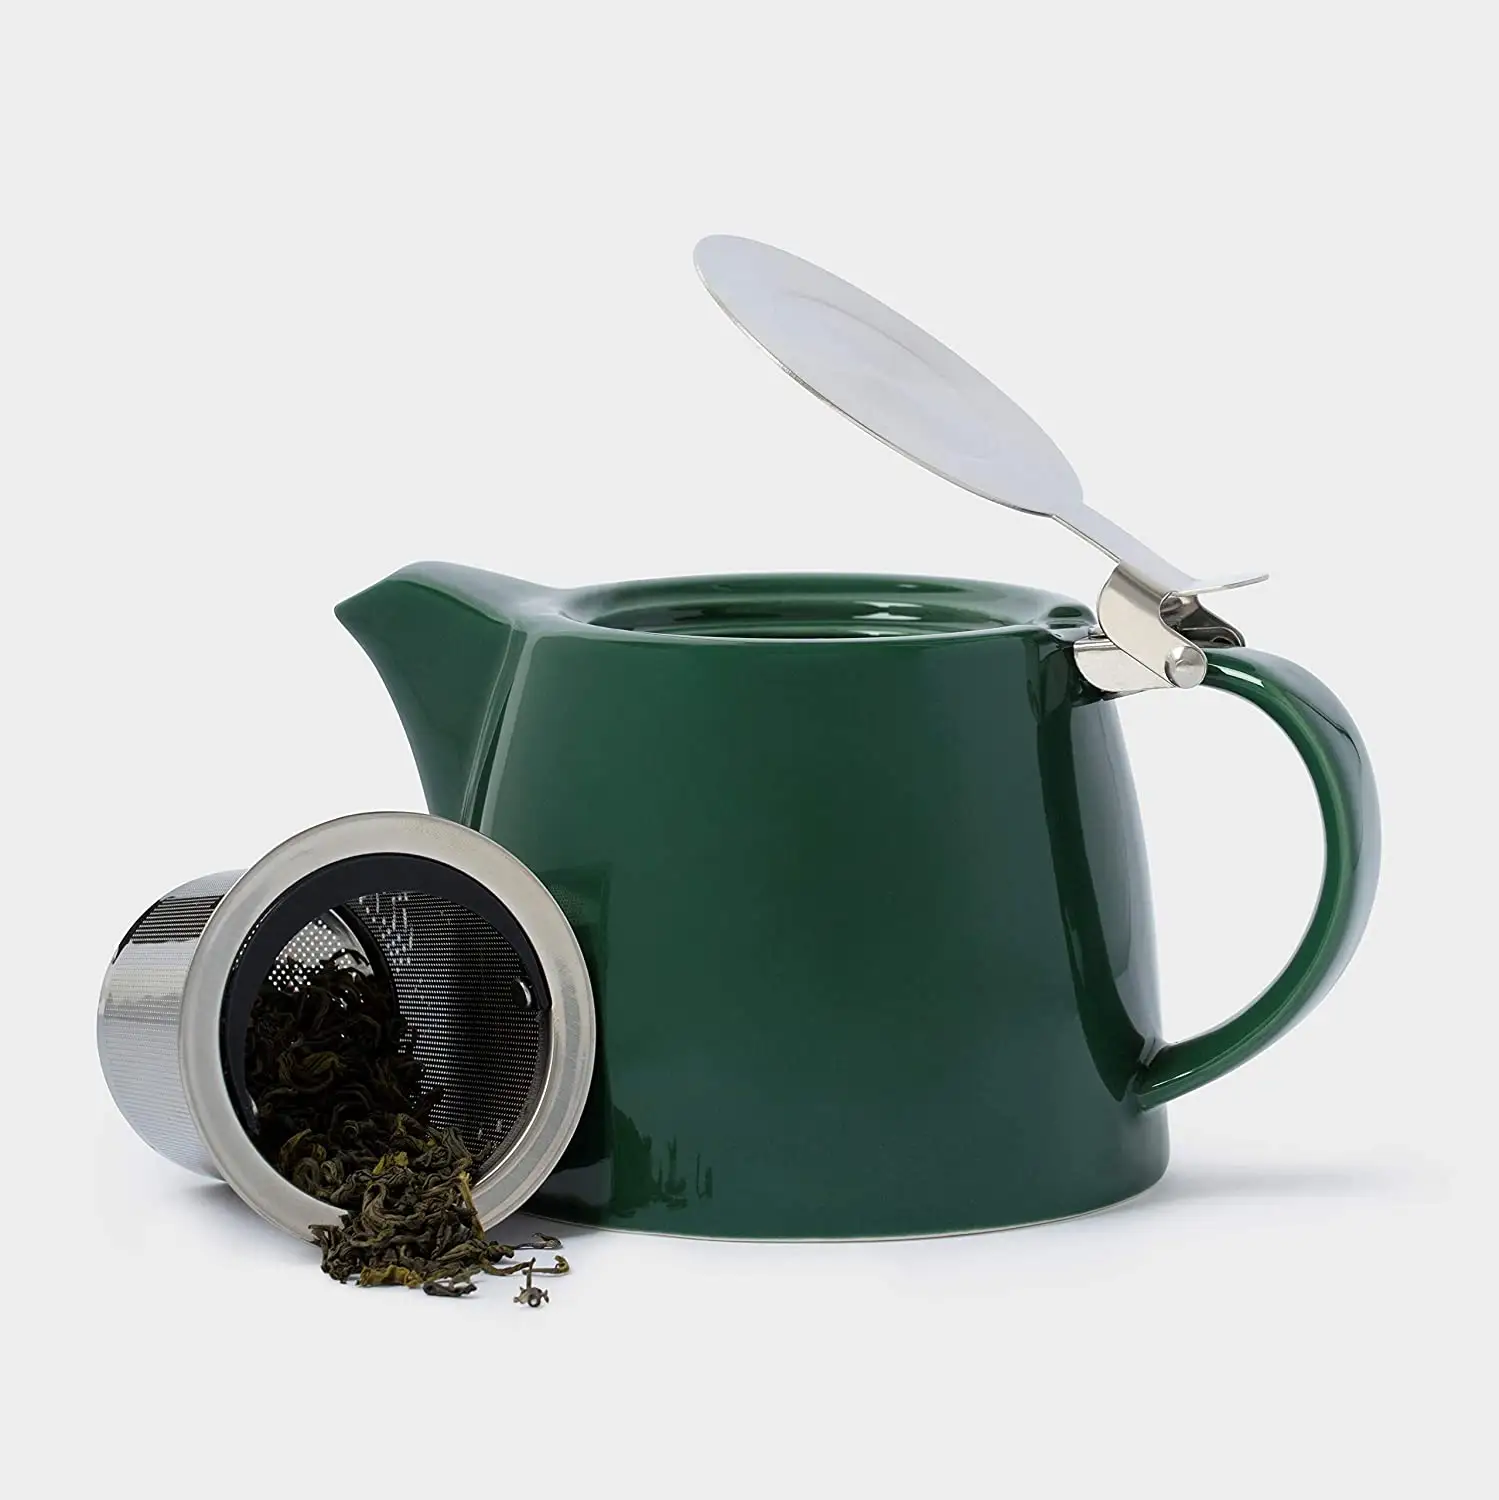 18oz 540ml Customized Loose Tea Maker Porcelain Tea Kettle Ceramic Tea Pot with Stainless Steel Infuser